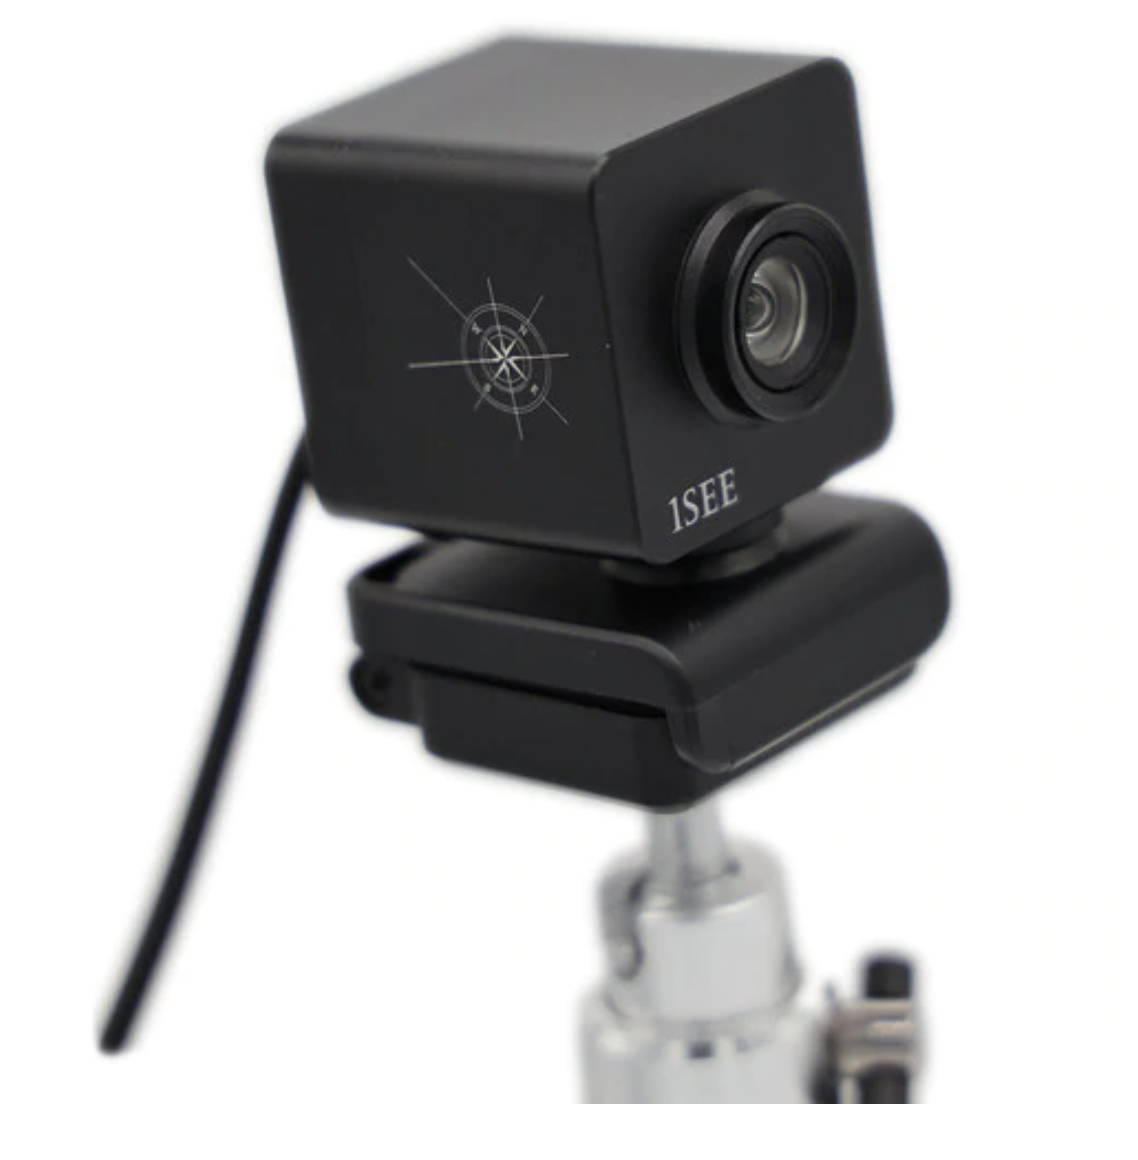 VDO360 1SEE 1080p USB 2.0 Webcam on tripod